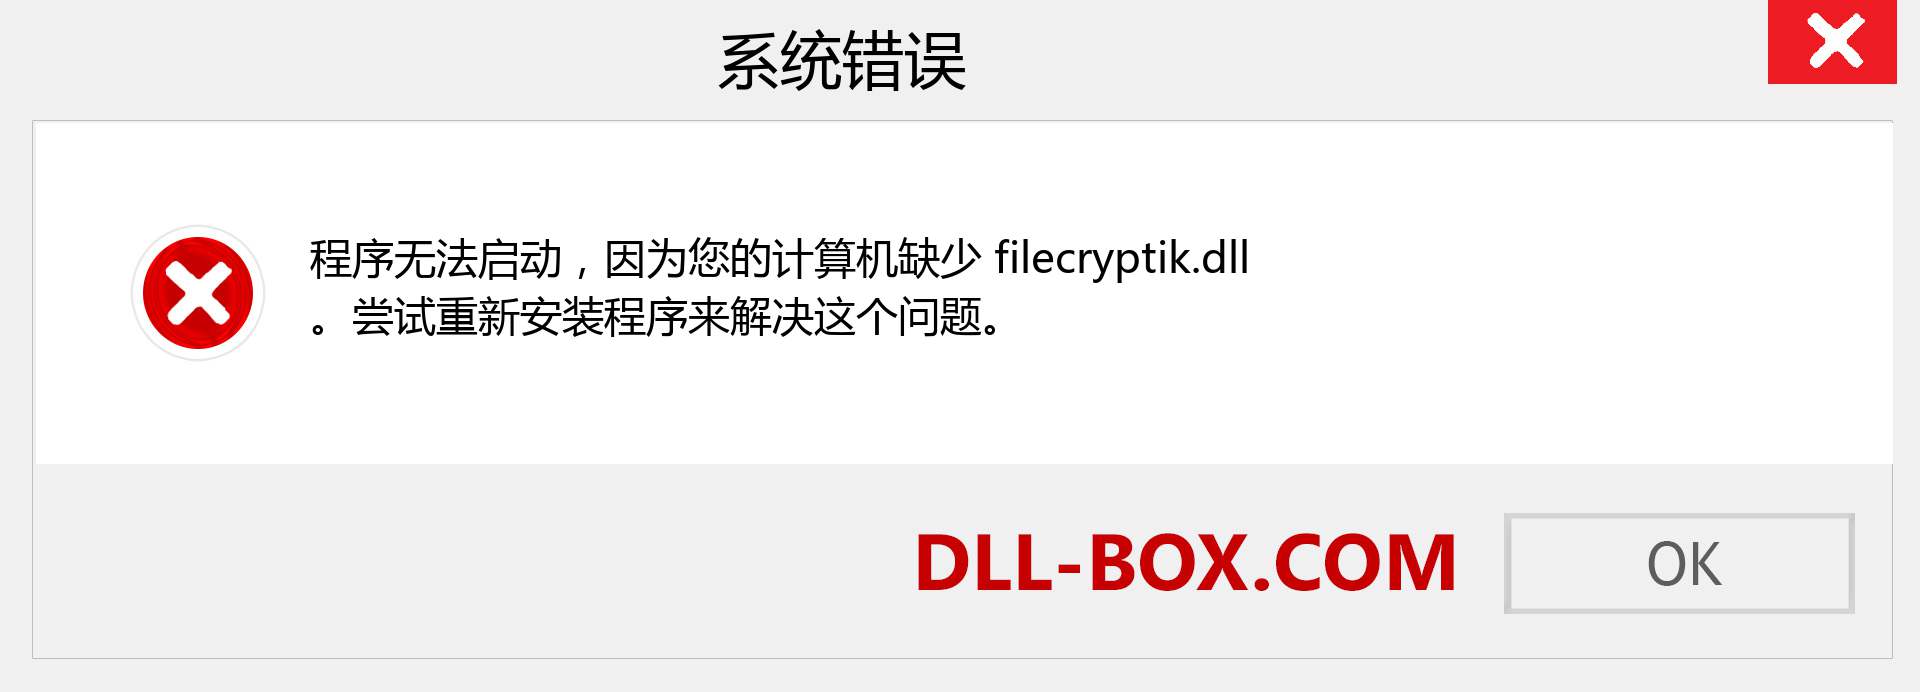 filecryptik.dll 文件丢失？。 适用于 Windows 7、8、10 的下载 - 修复 Windows、照片、图像上的 filecryptik dll 丢失错误